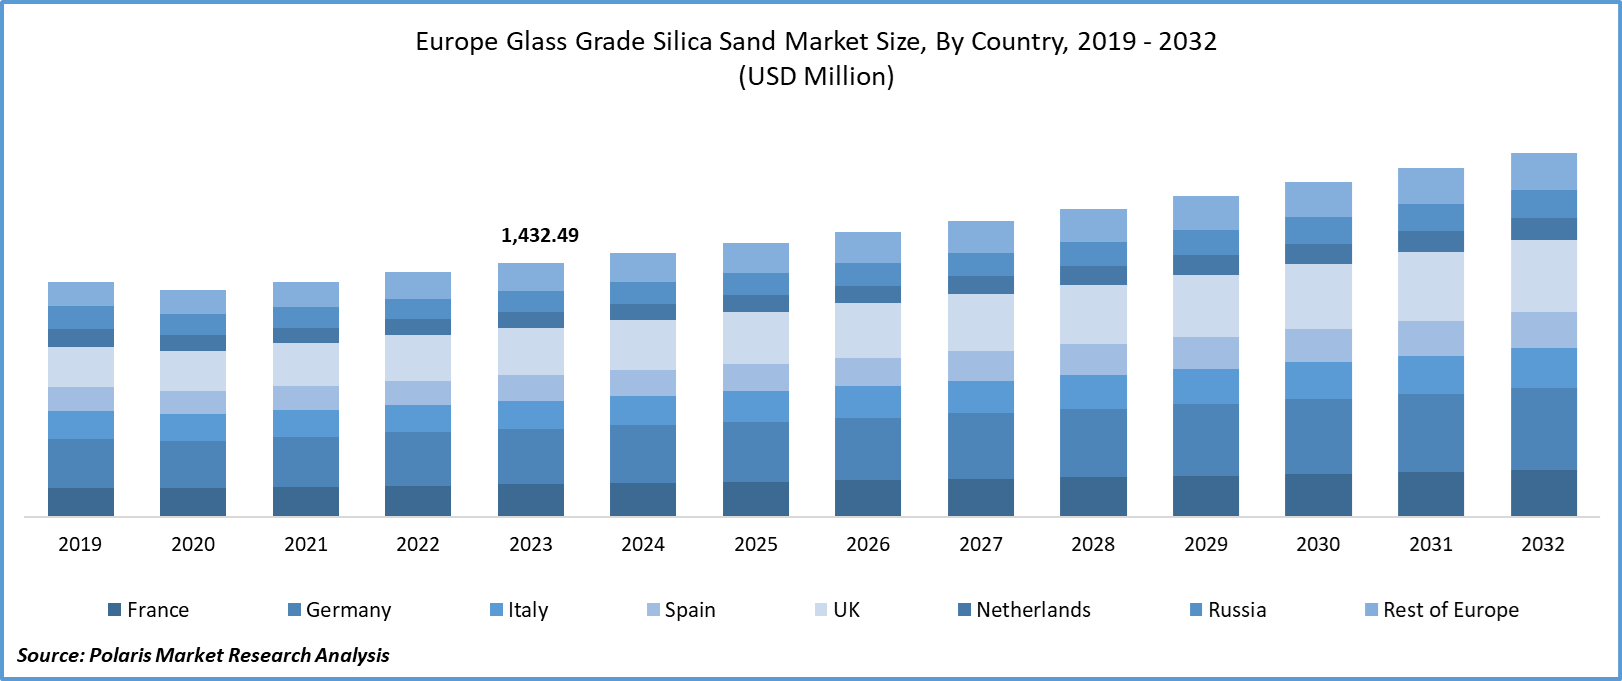 Europe Glass Grade Silica Sand Market Size